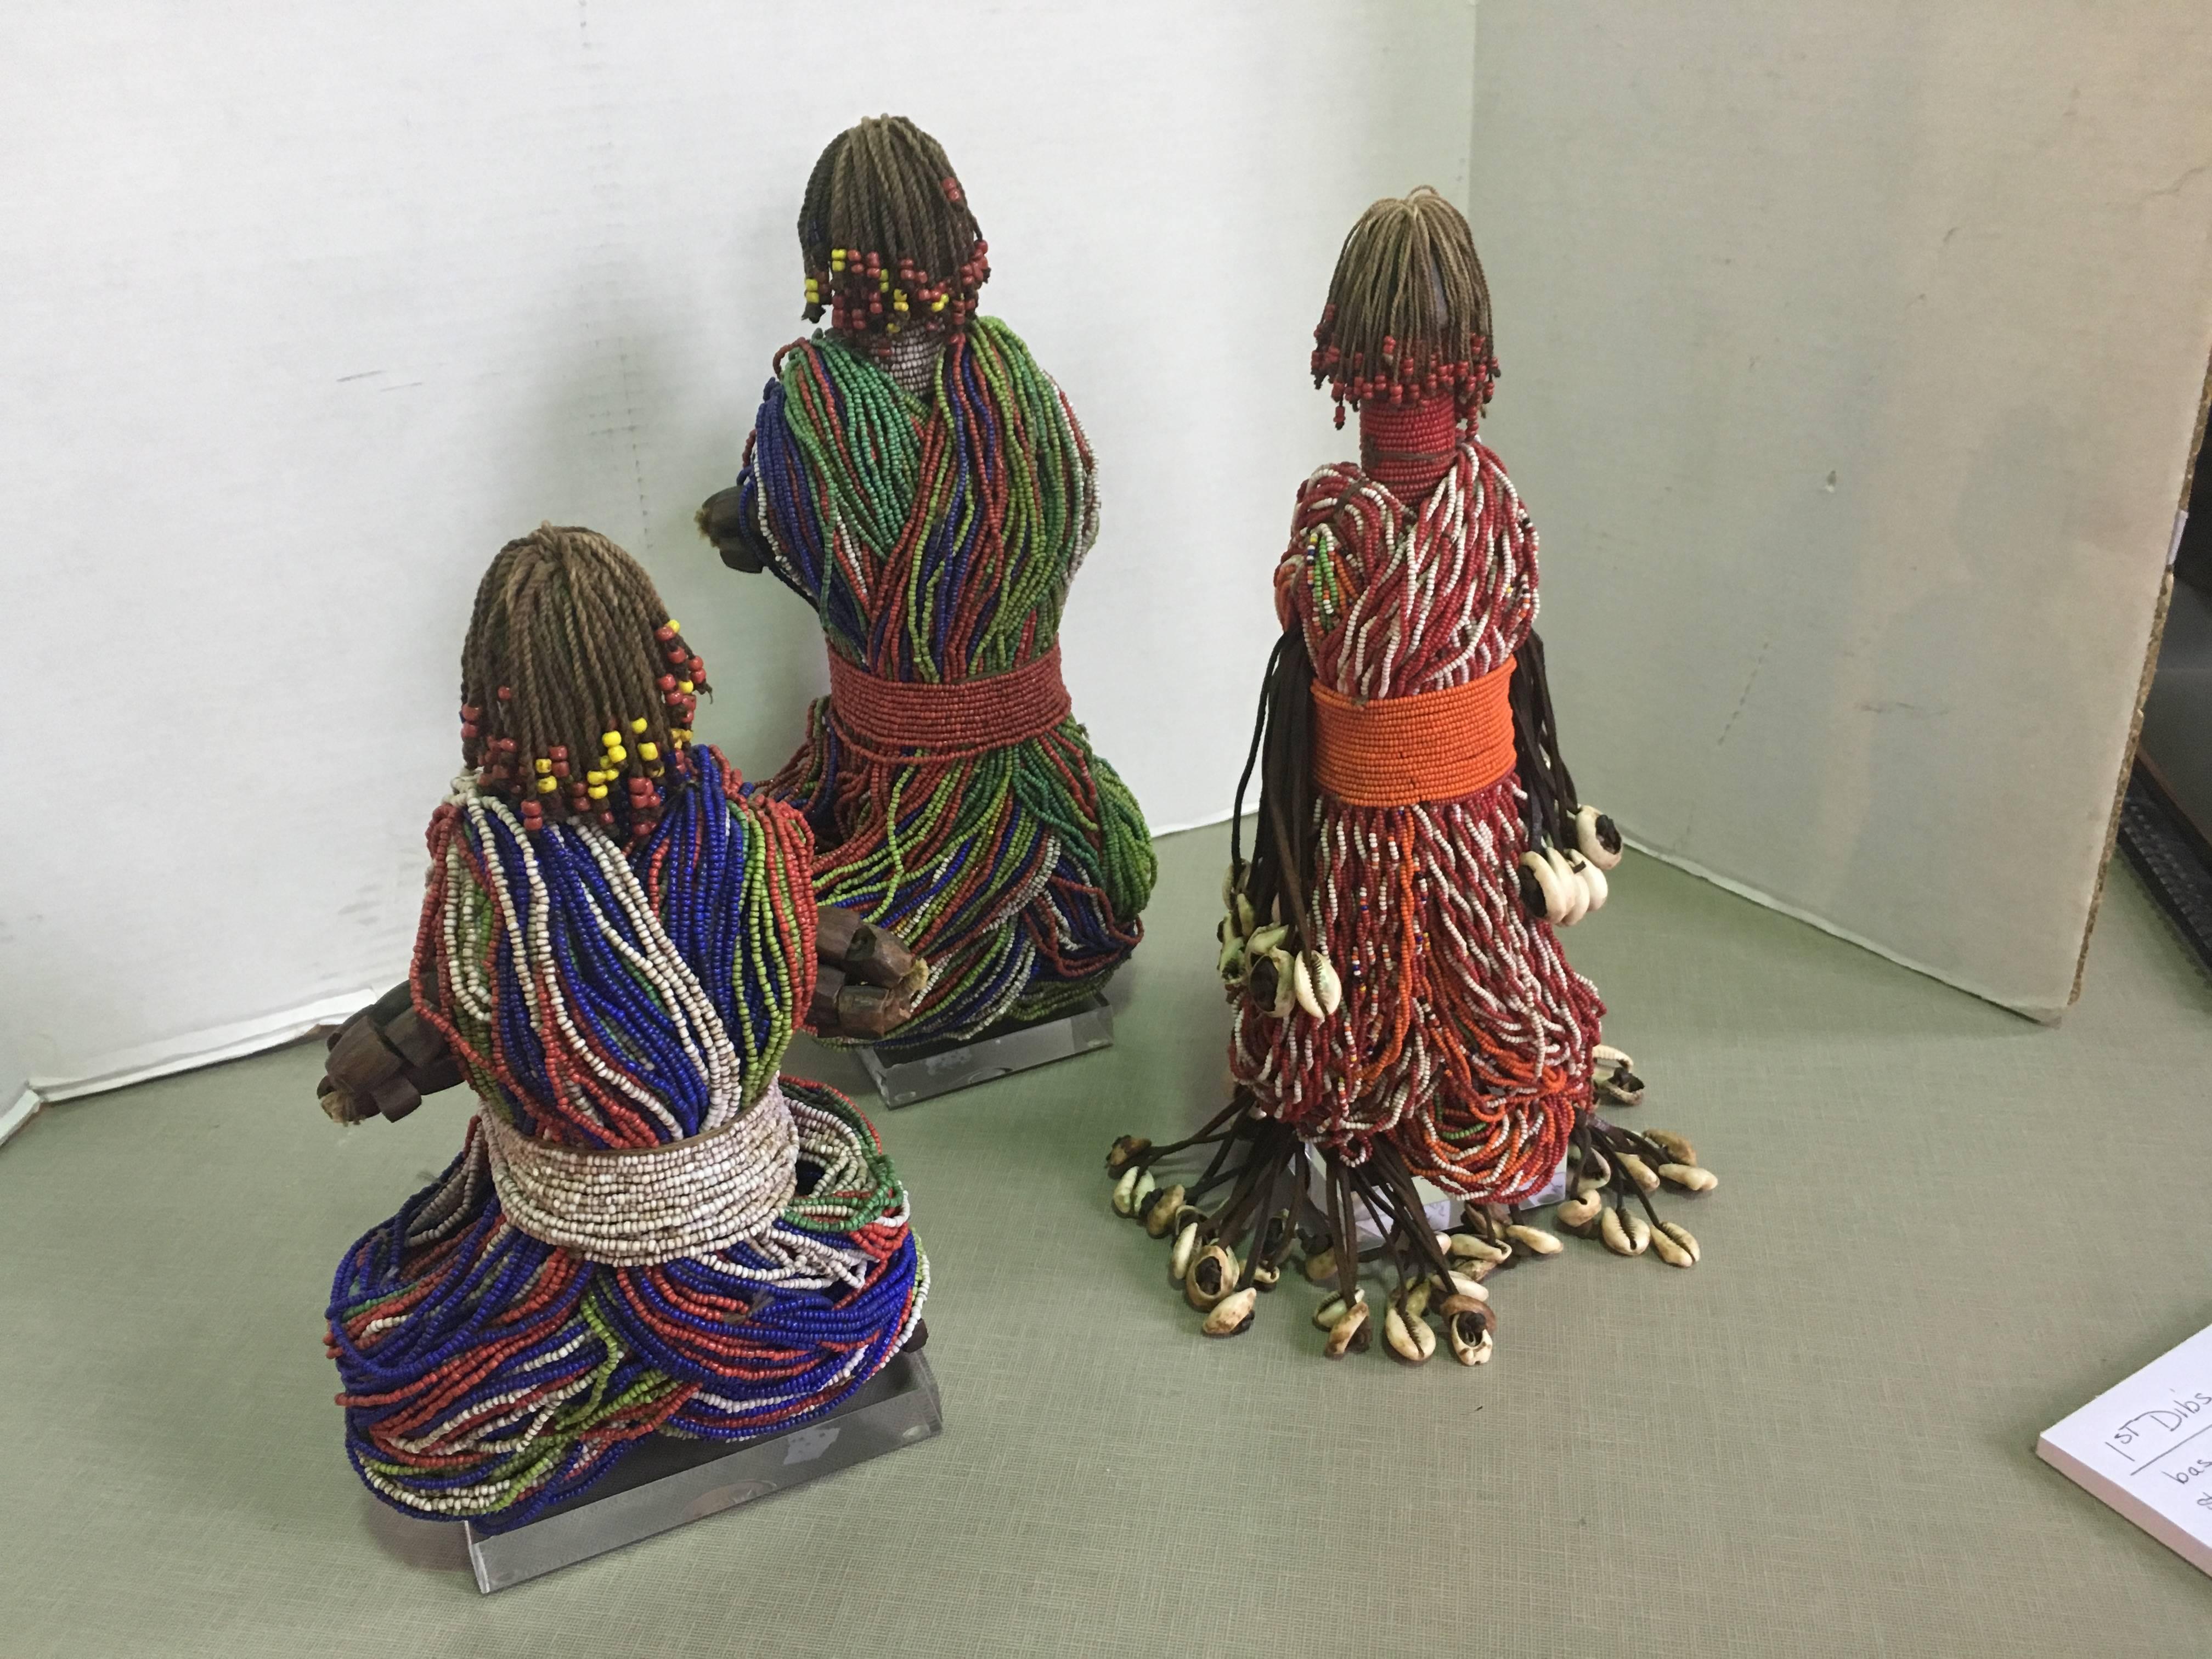 Three African Fali fertility dolls from Cameroon.

Measures: Blue one 10.5x 6.5 x 5.

Green one 13.5 x 6 x 4.5.

Orange one 12.5 x 5.5 x 3.5.